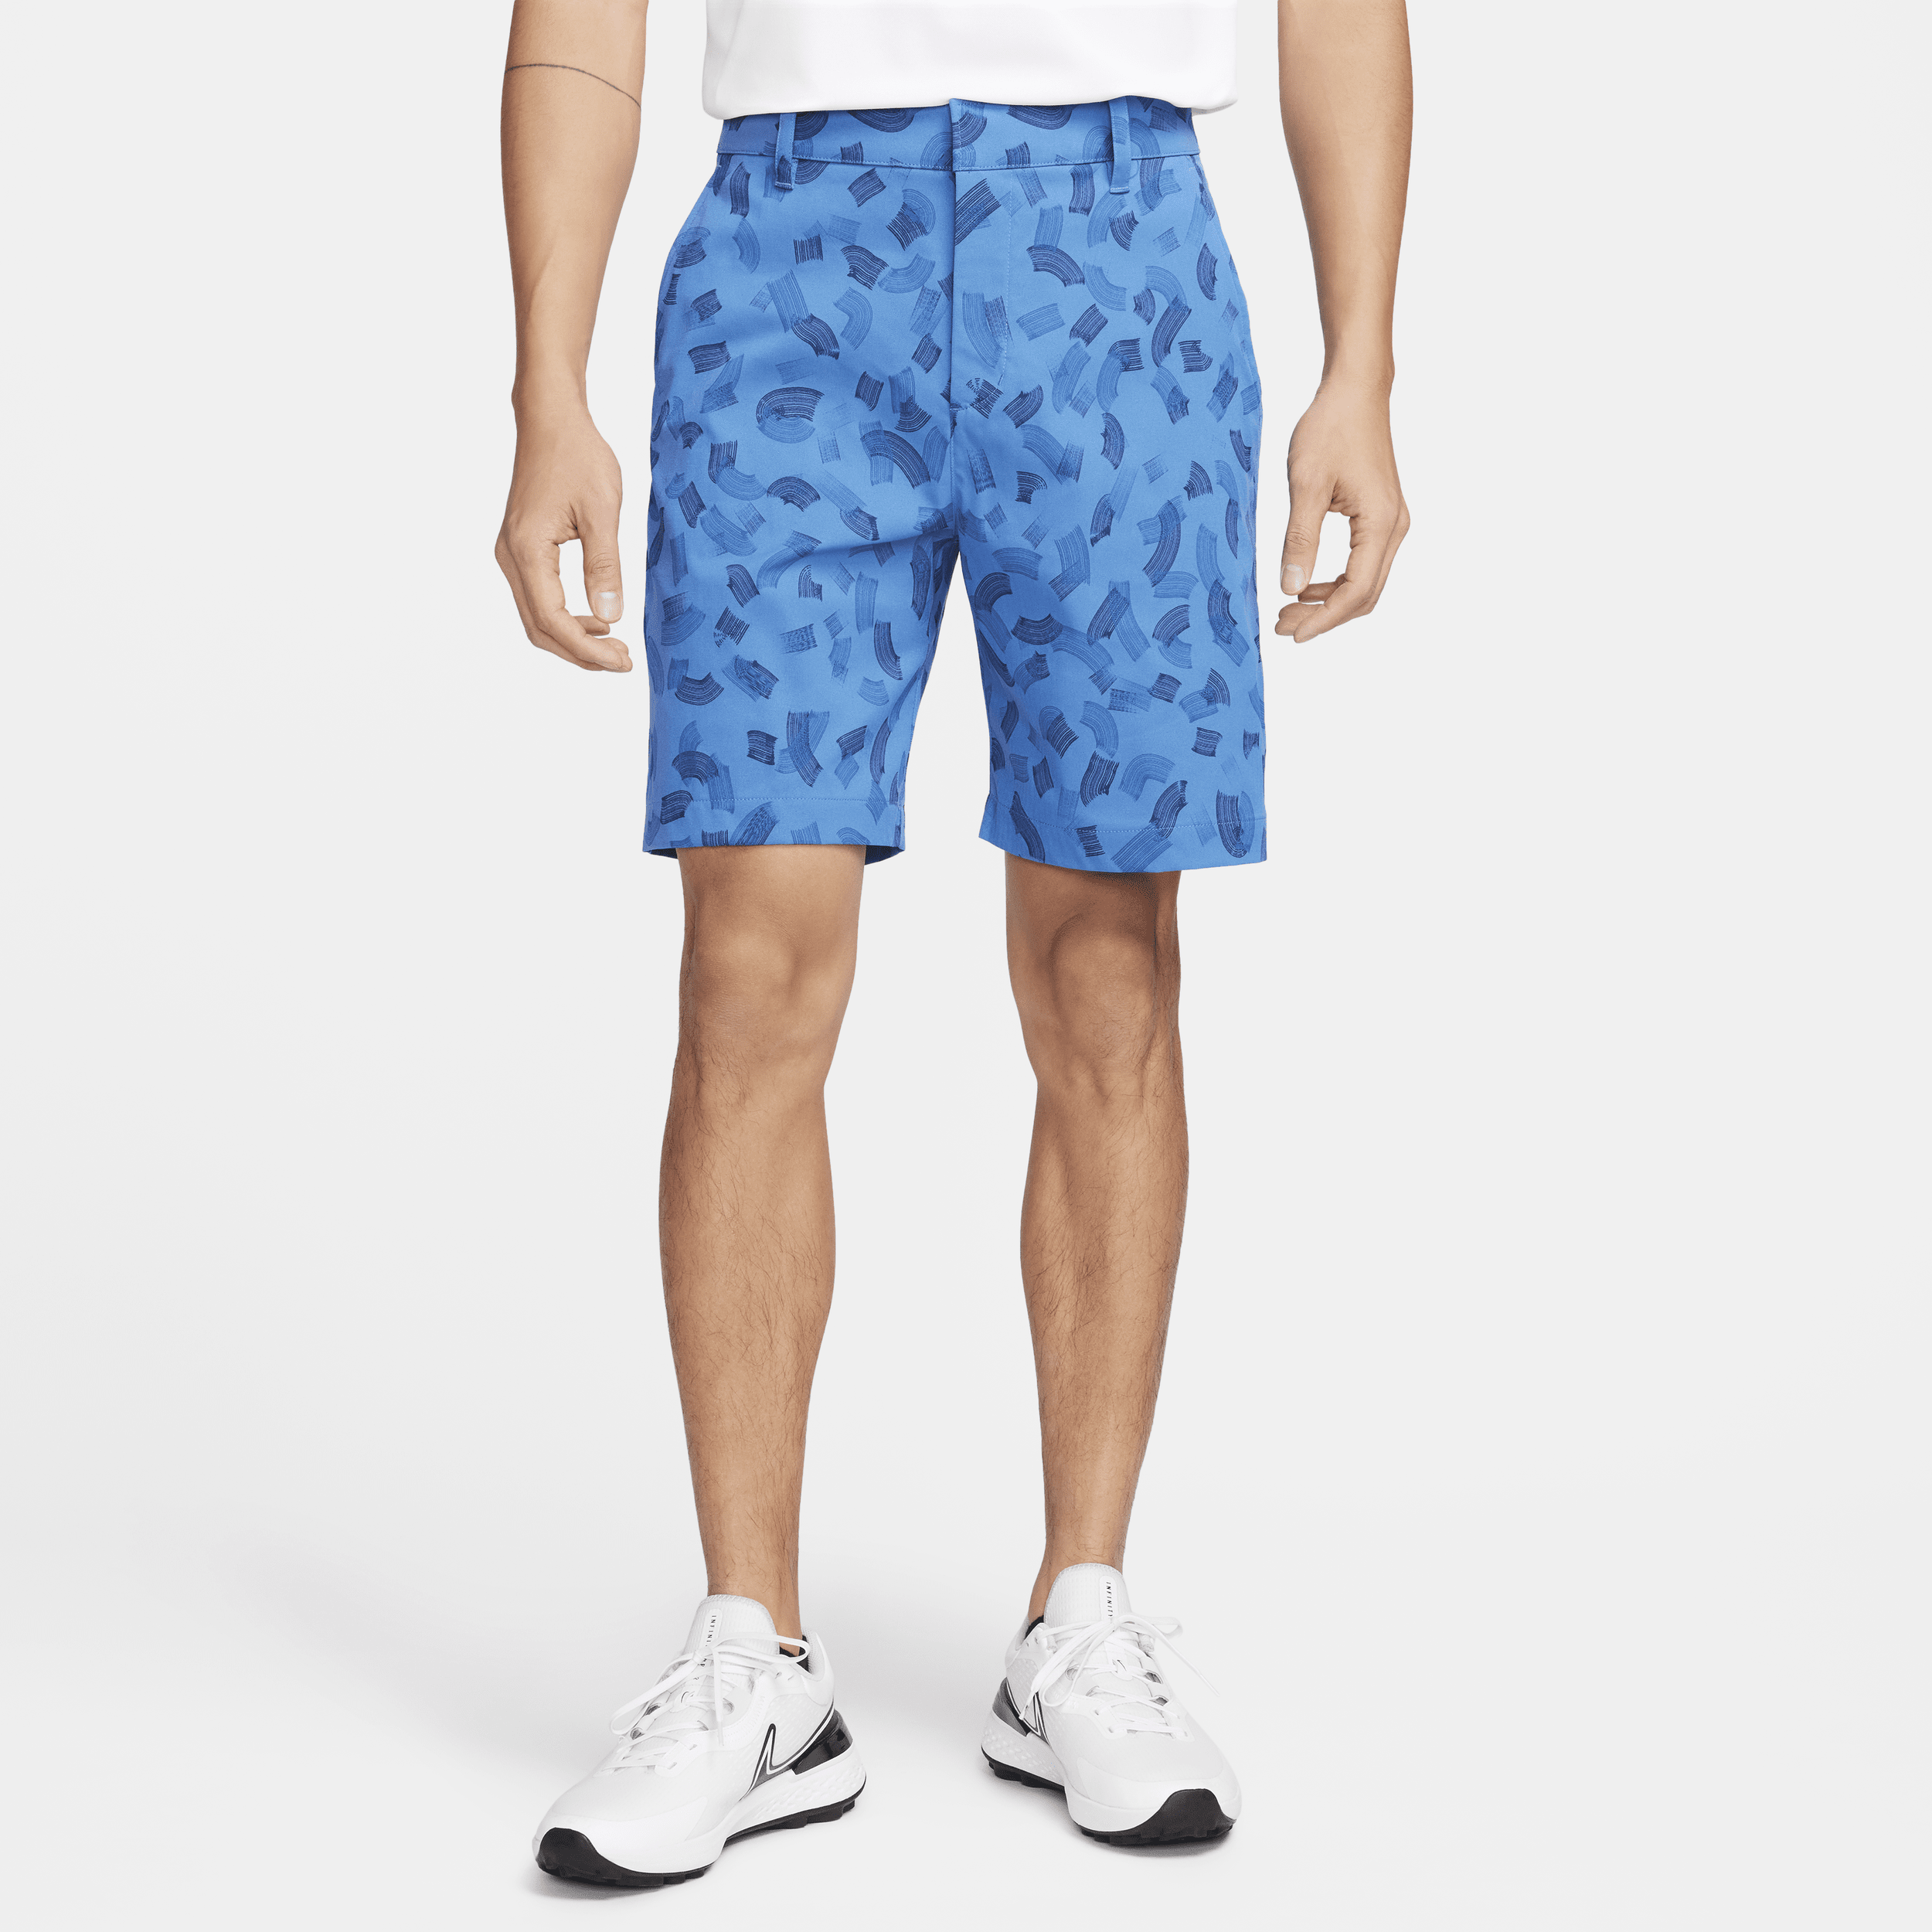 Nike Tour-chino-golfshorts (20 cm) til mænd - blå